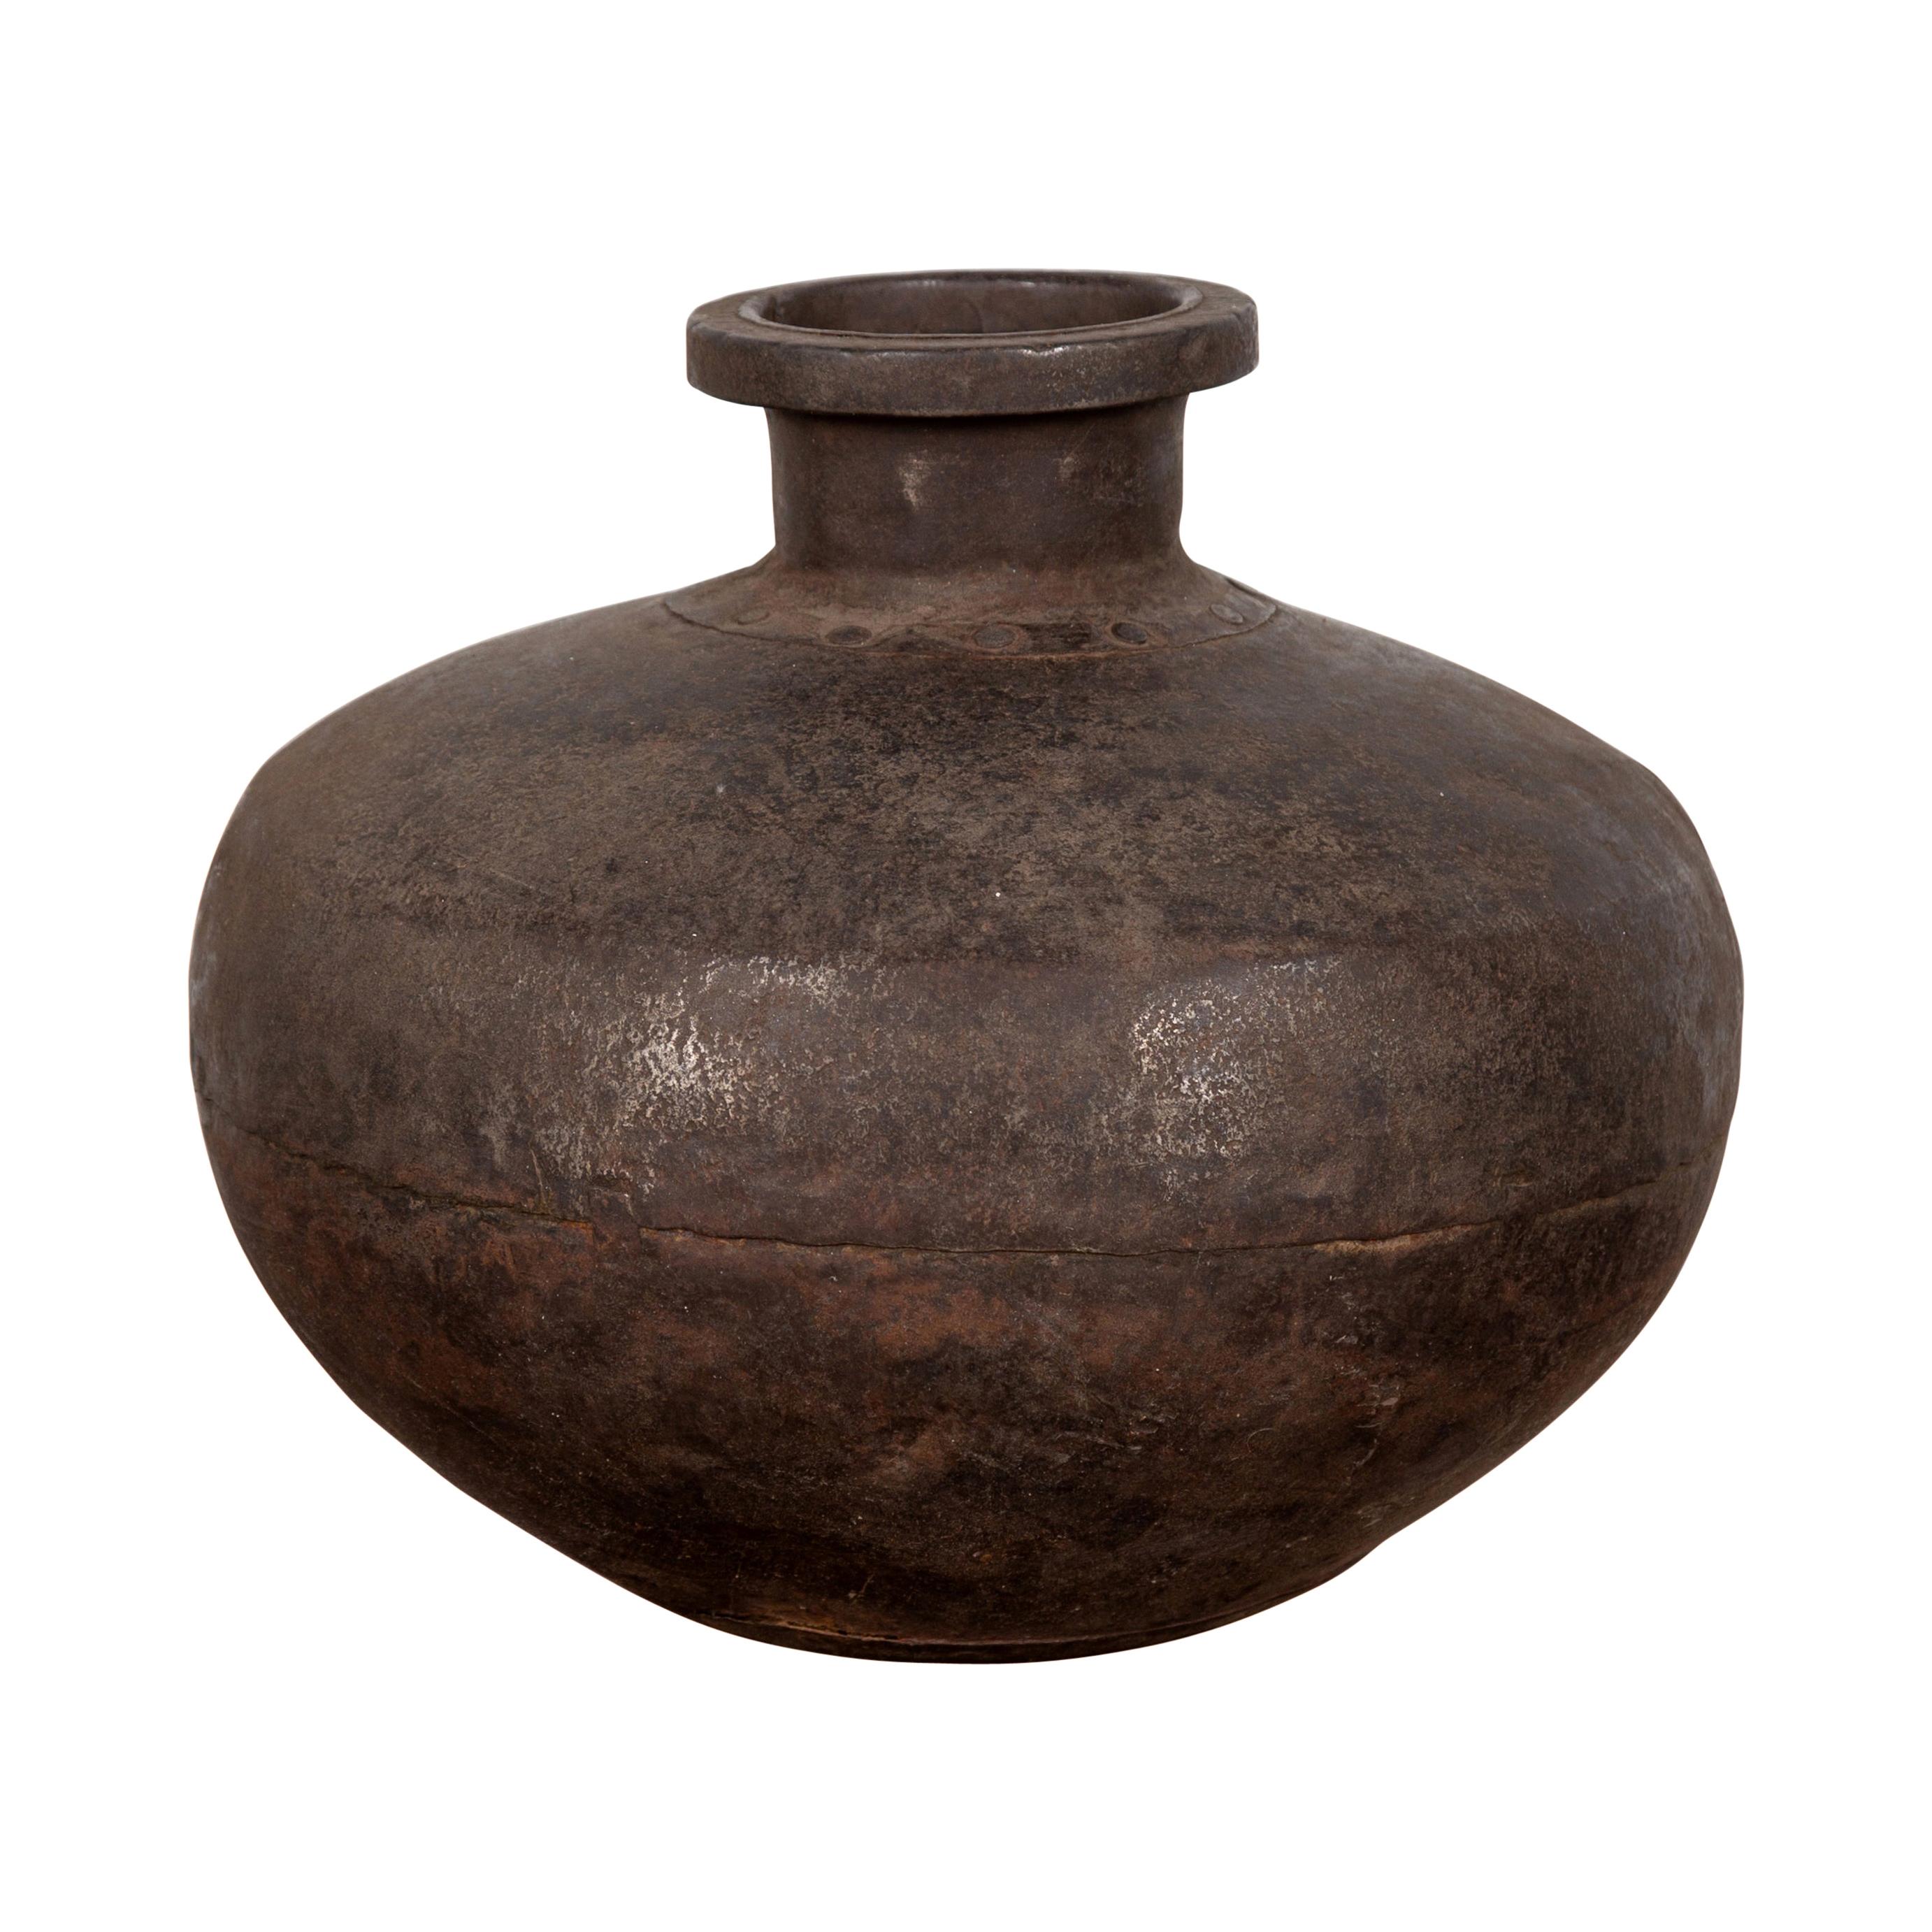 Details about   Vintage Garden Brown Barrel Shape Glossy Ceramic Self Watering Stake Japan 